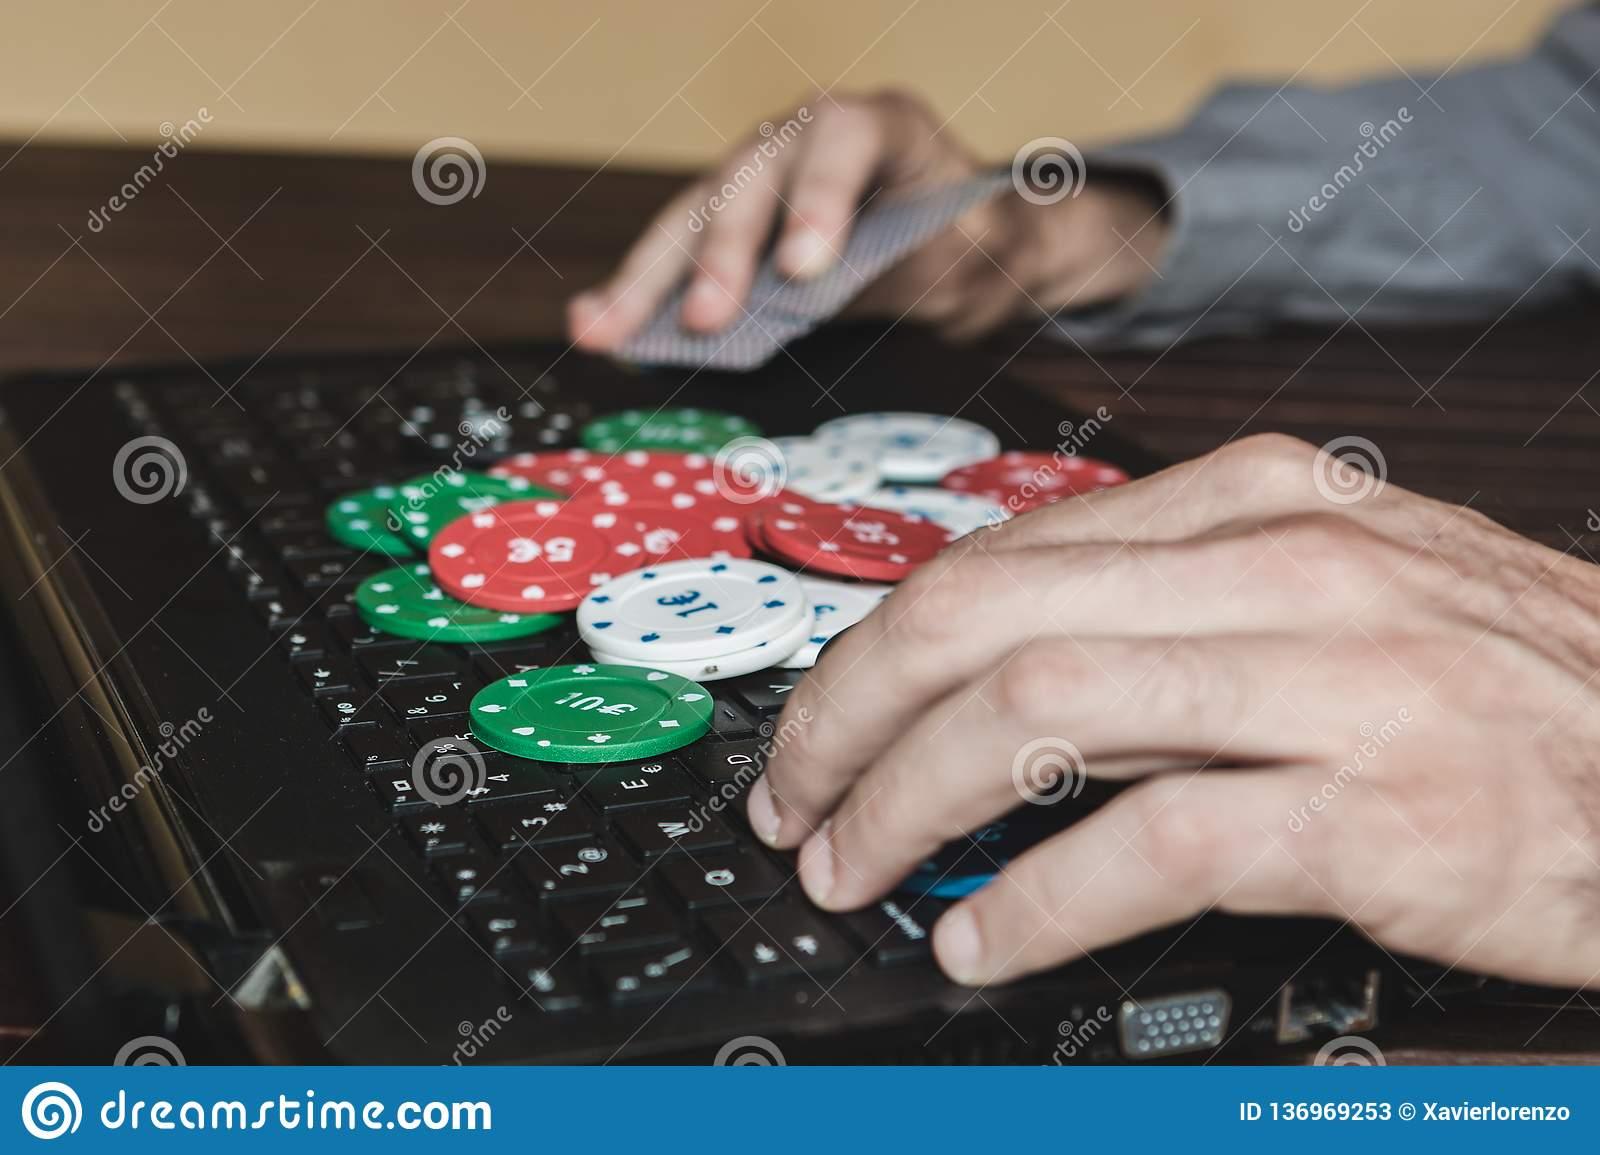 poker idea